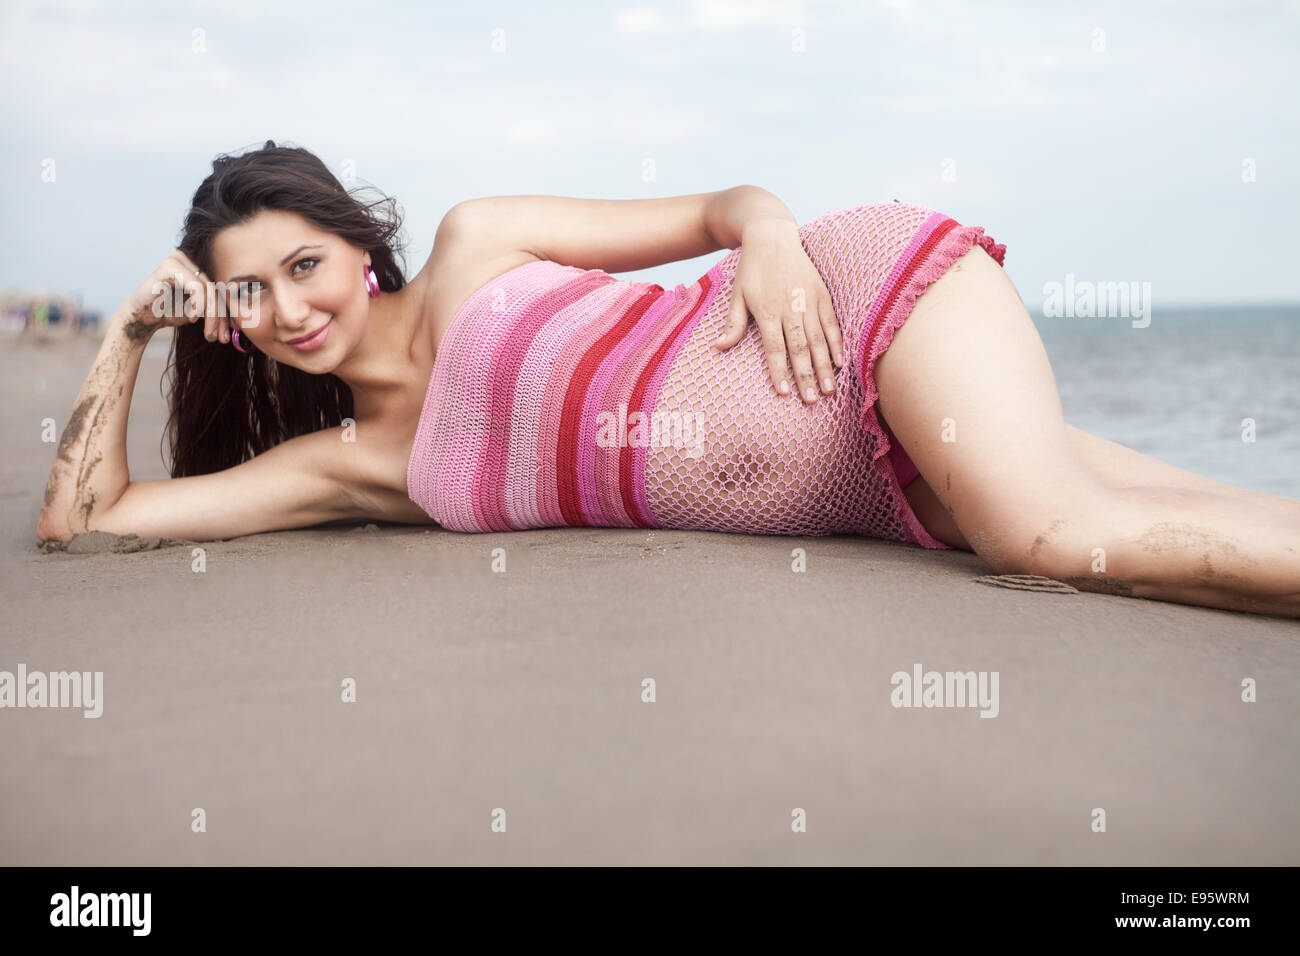 Pregnant woman in white bikini posing on the beach Stock Photo